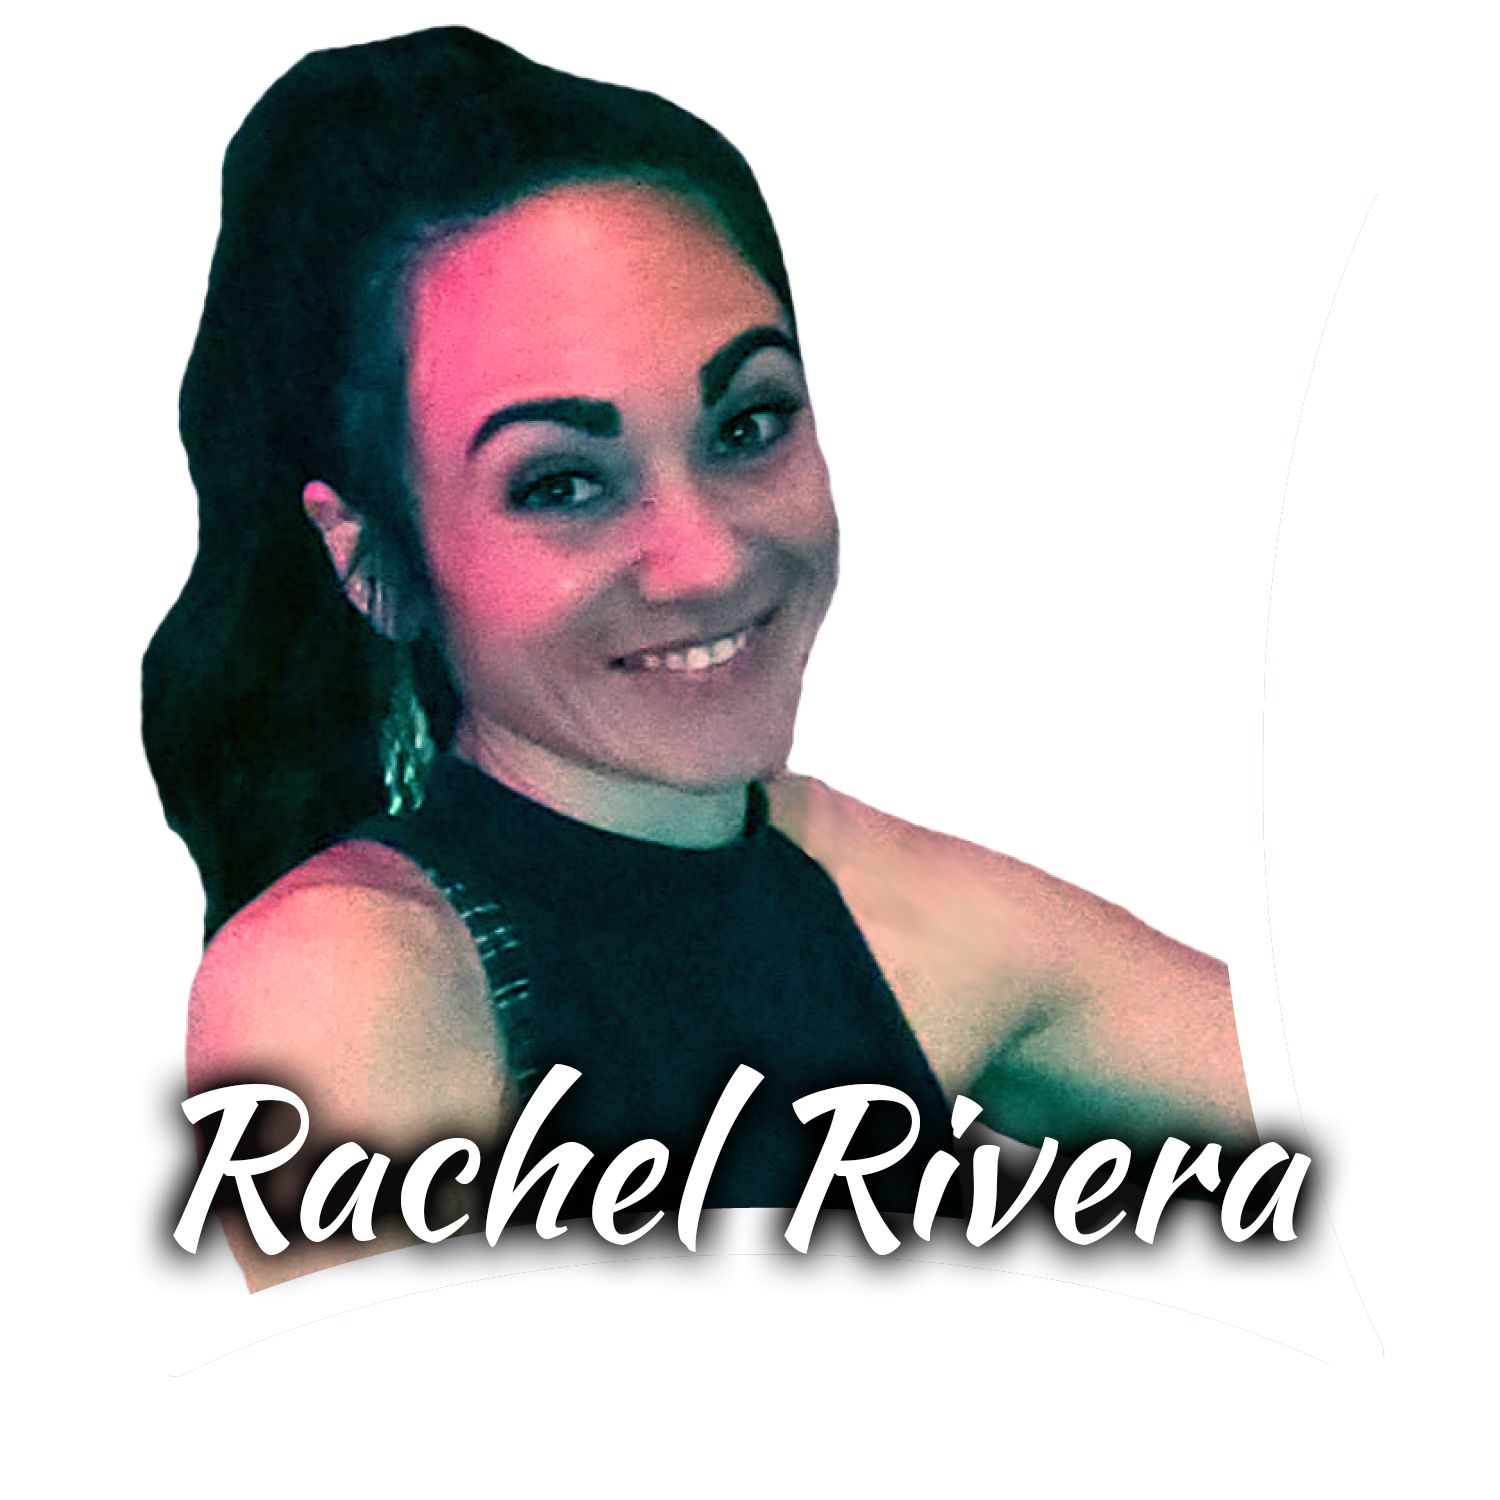 Rachel_Rivera-01